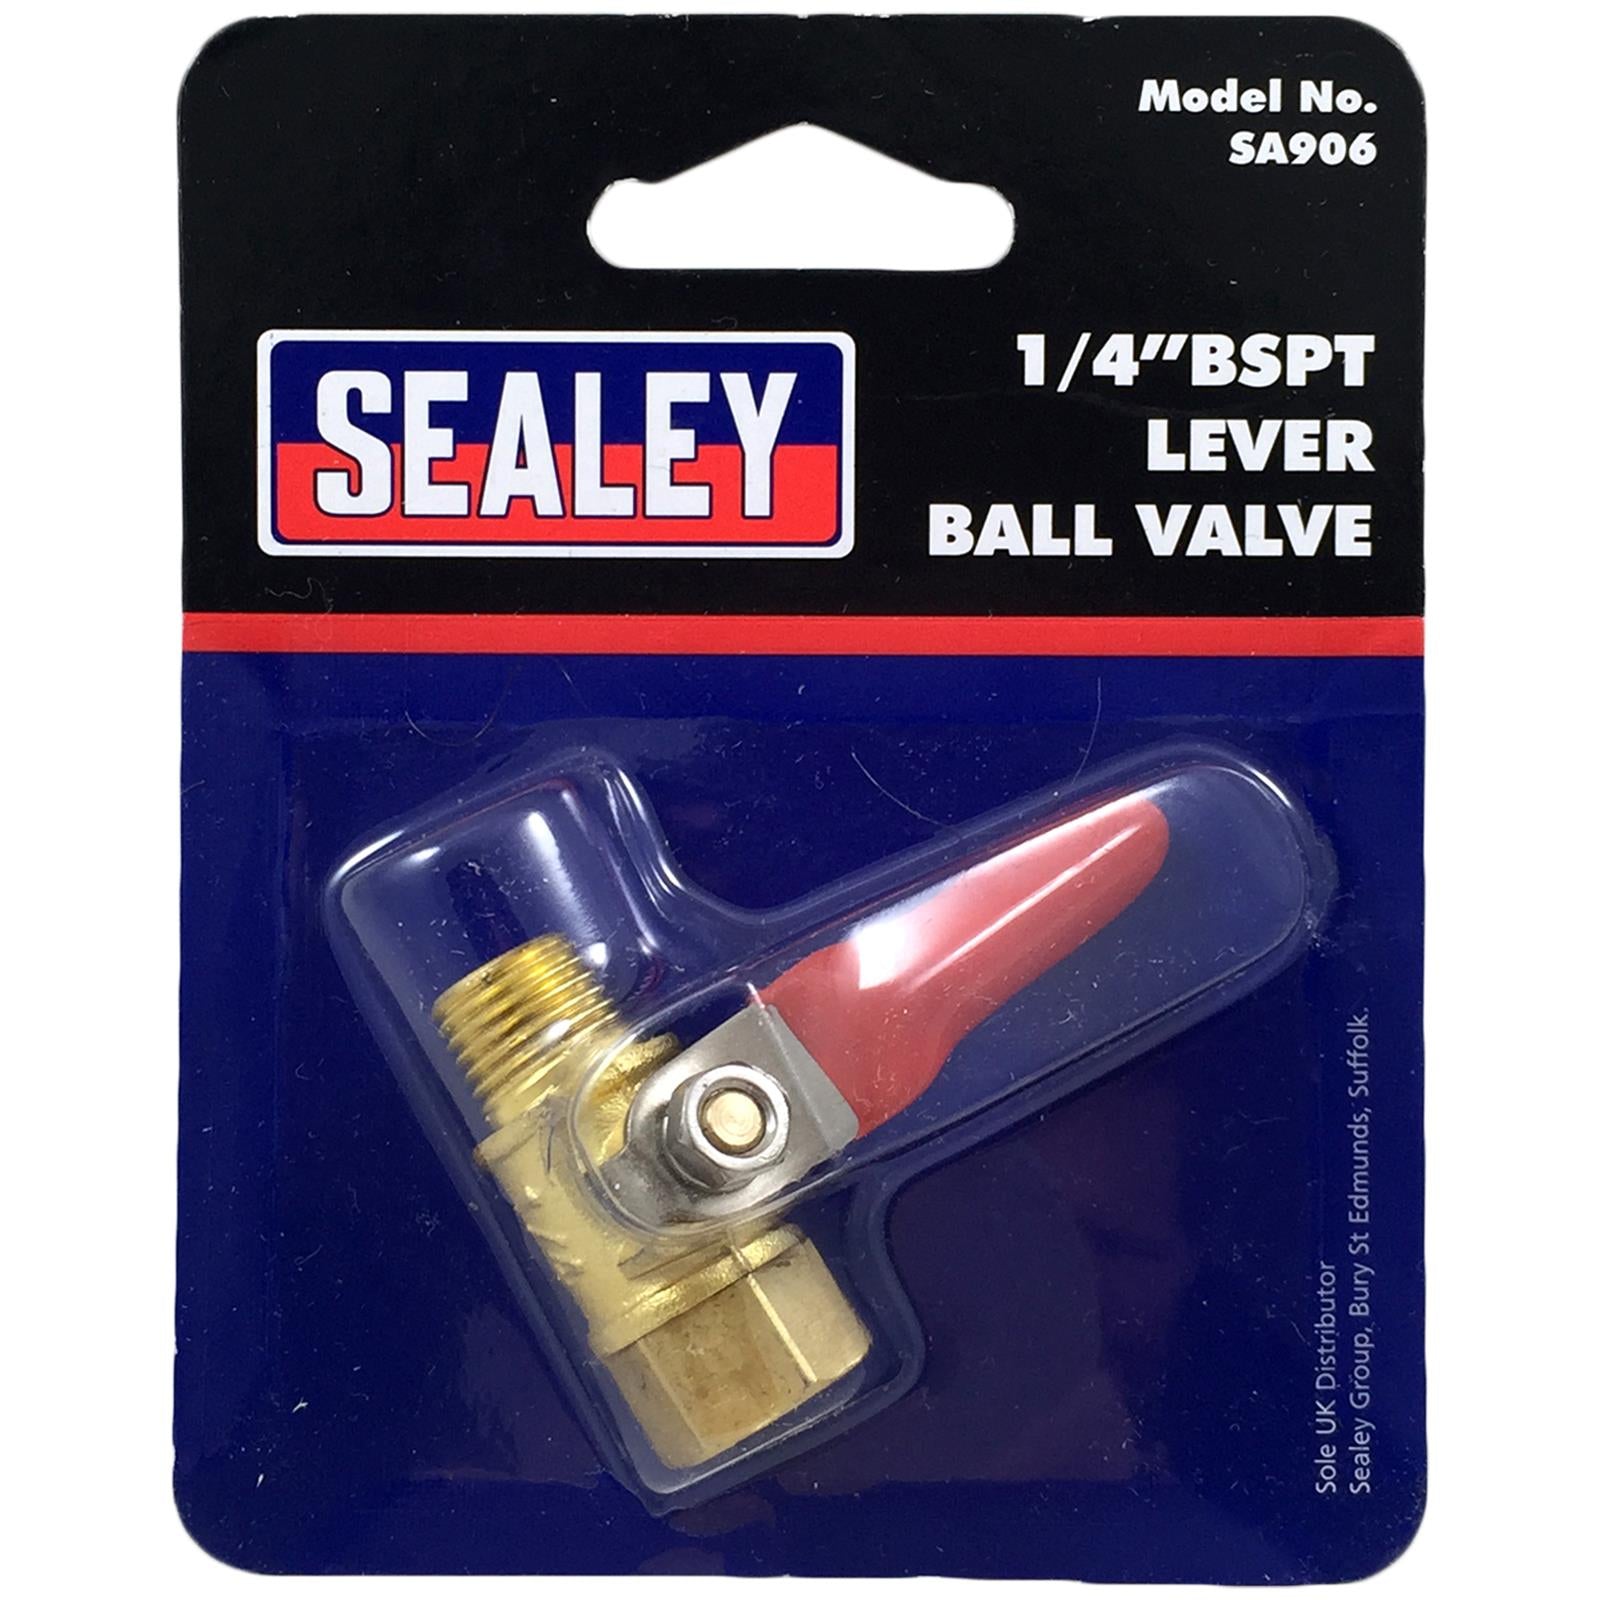 Sealey 1/4" BSPT Ball Valve Lever Air Compressor Connector